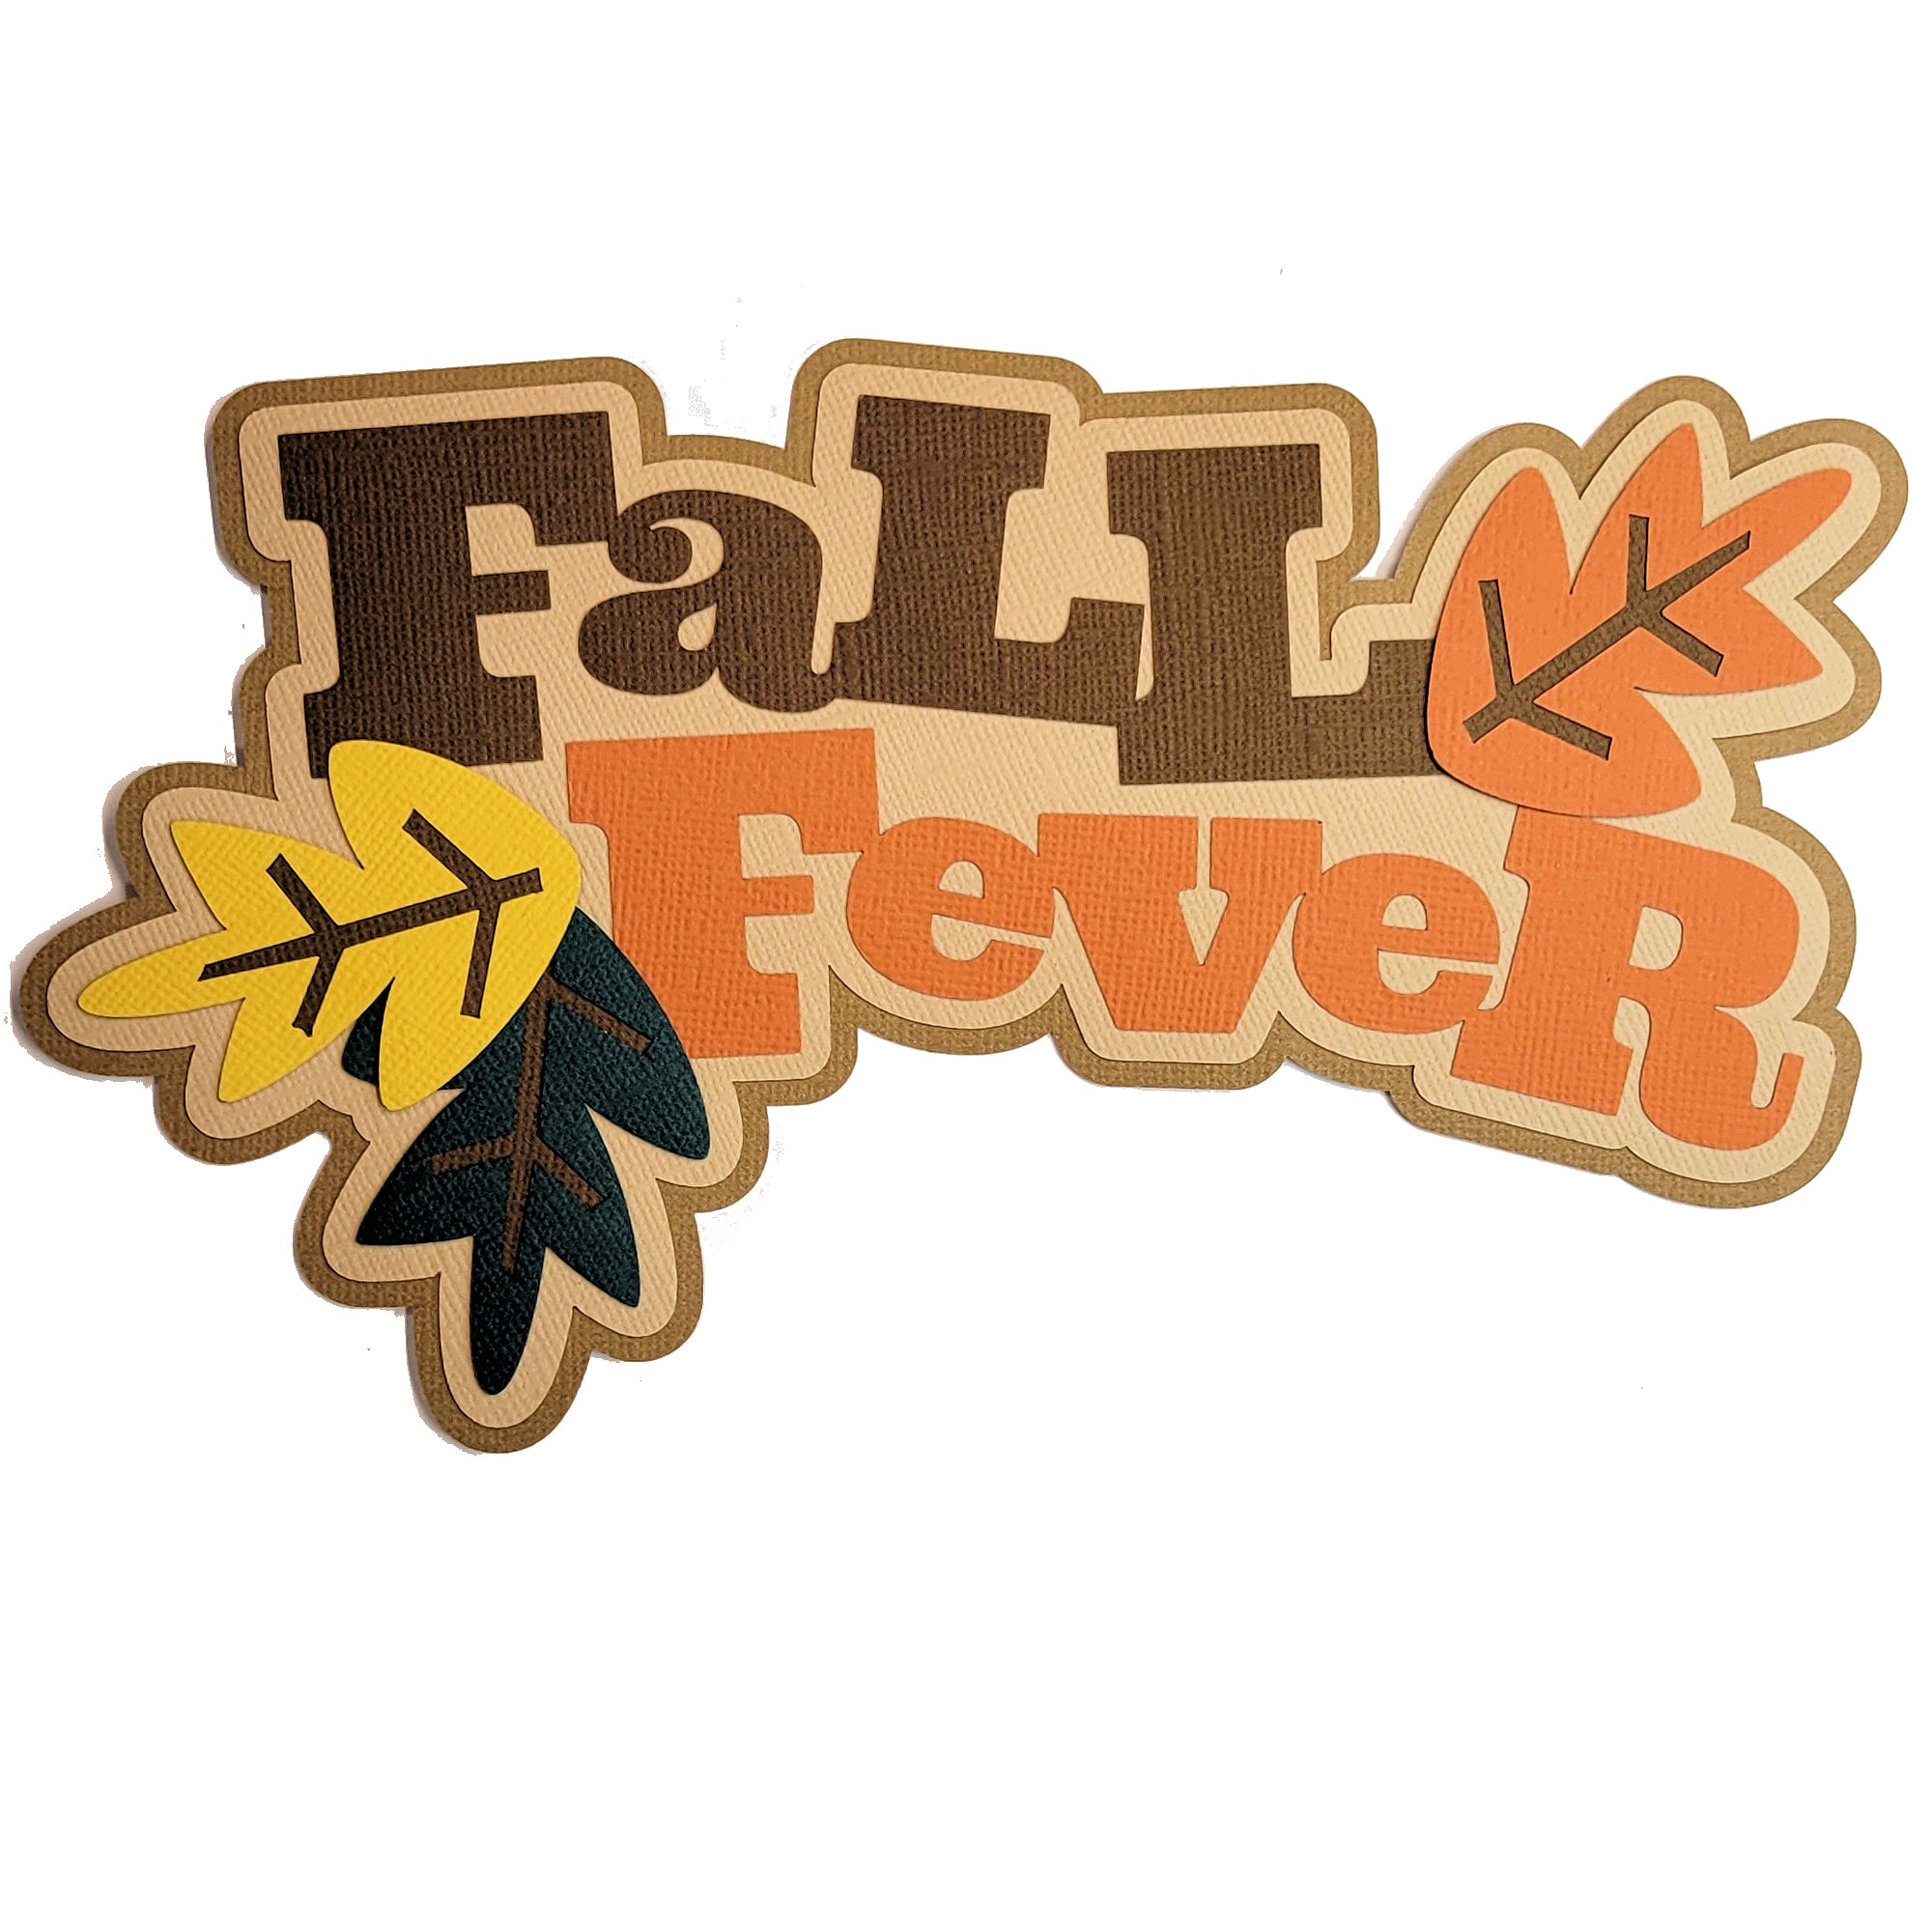 Fall Fever Title 8 x 4.5 Fully-Assembled Laser Cut Scrapbook Embellishment by SSC Laser Designs